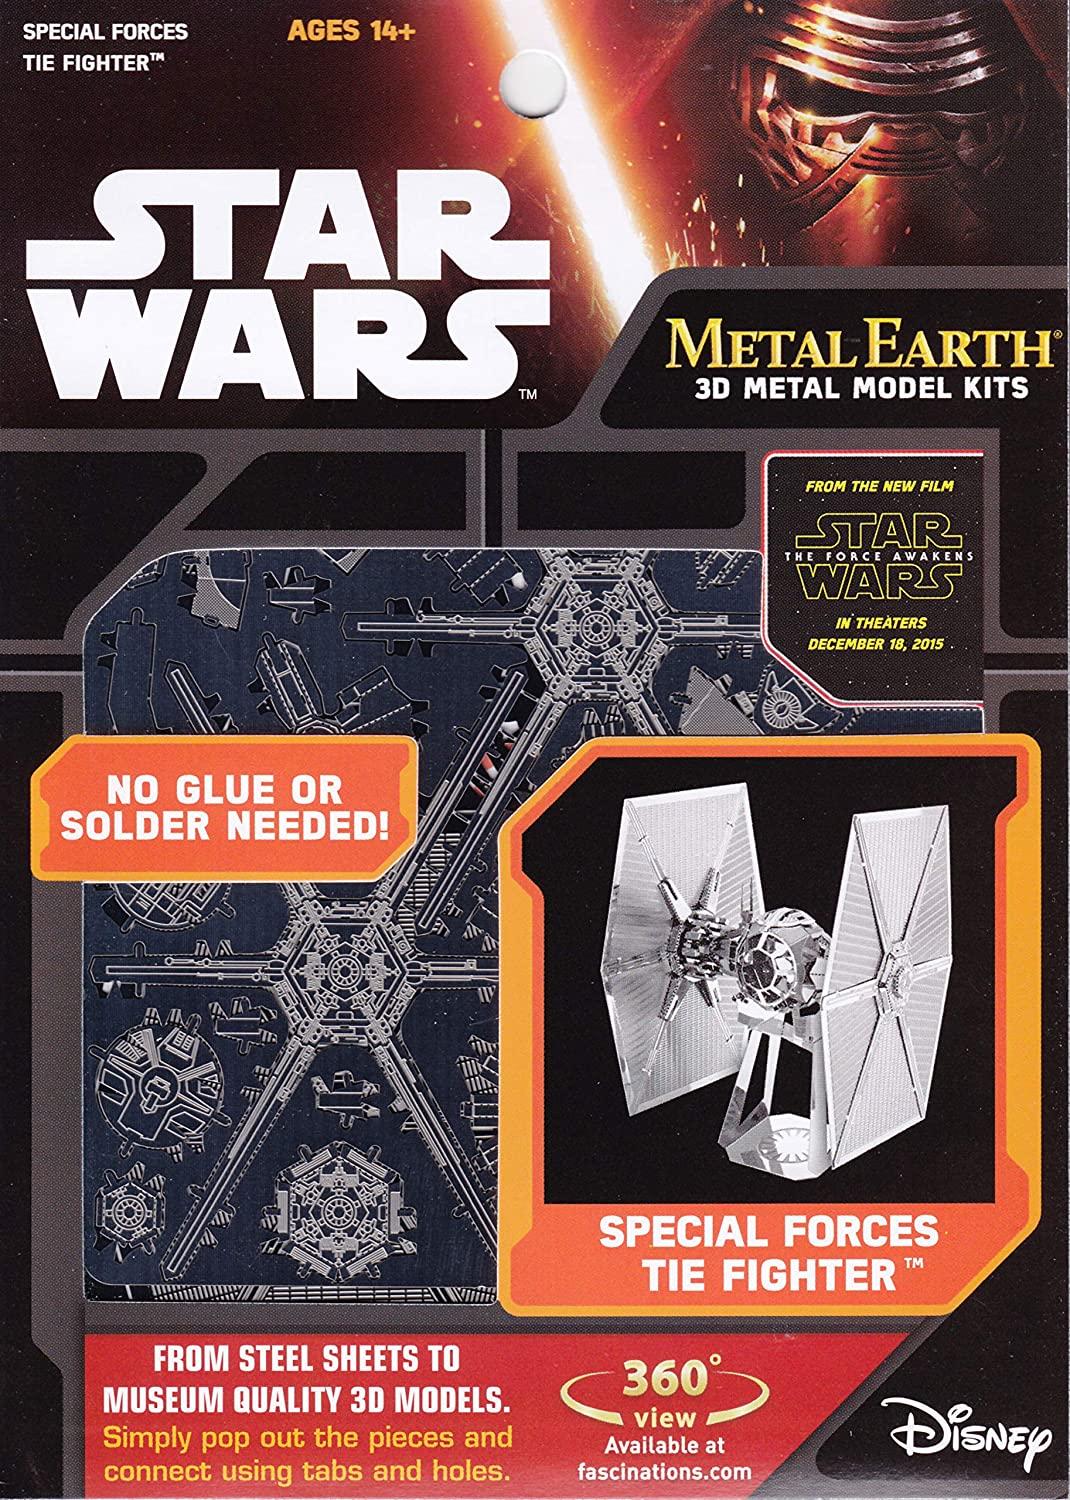 Darth Vader's TIE Advanced x1 Star Wars Metal Earth